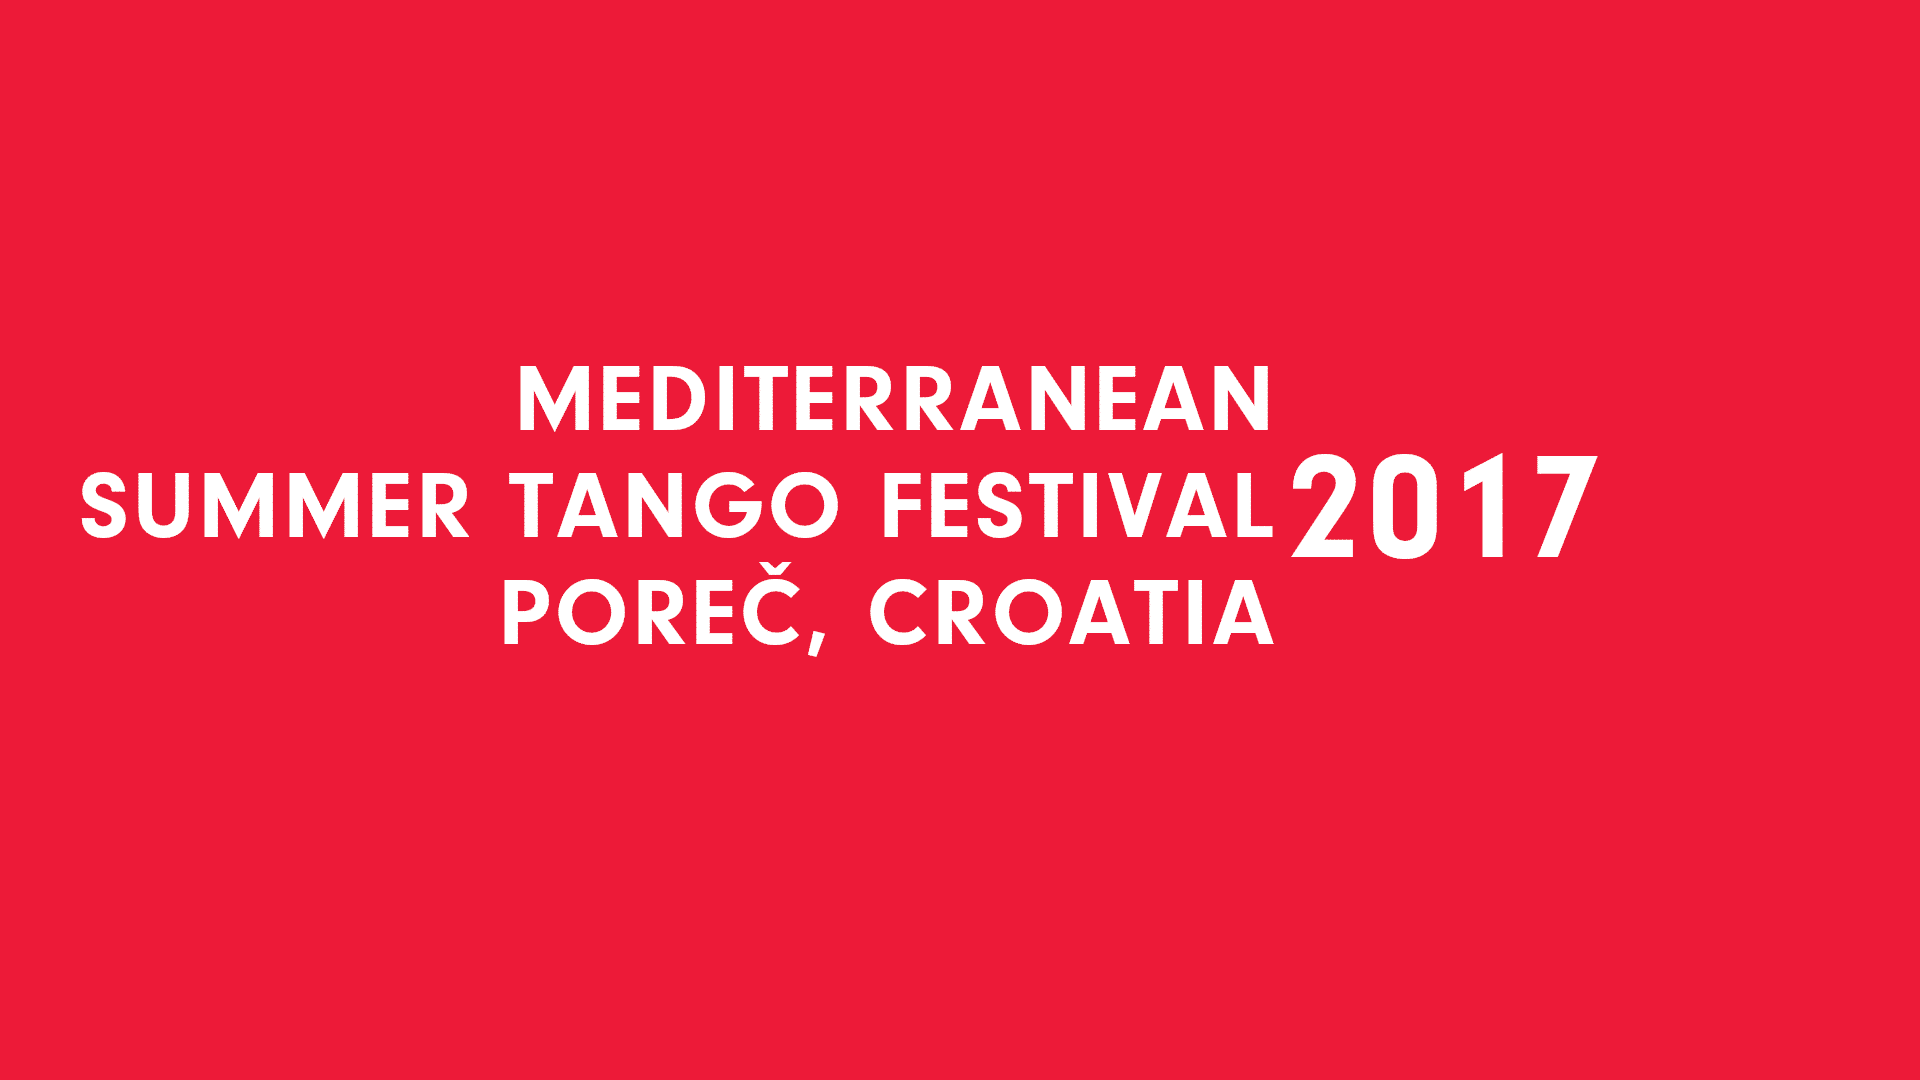 Mediterranean Summer Tango Festival 2017 event picture